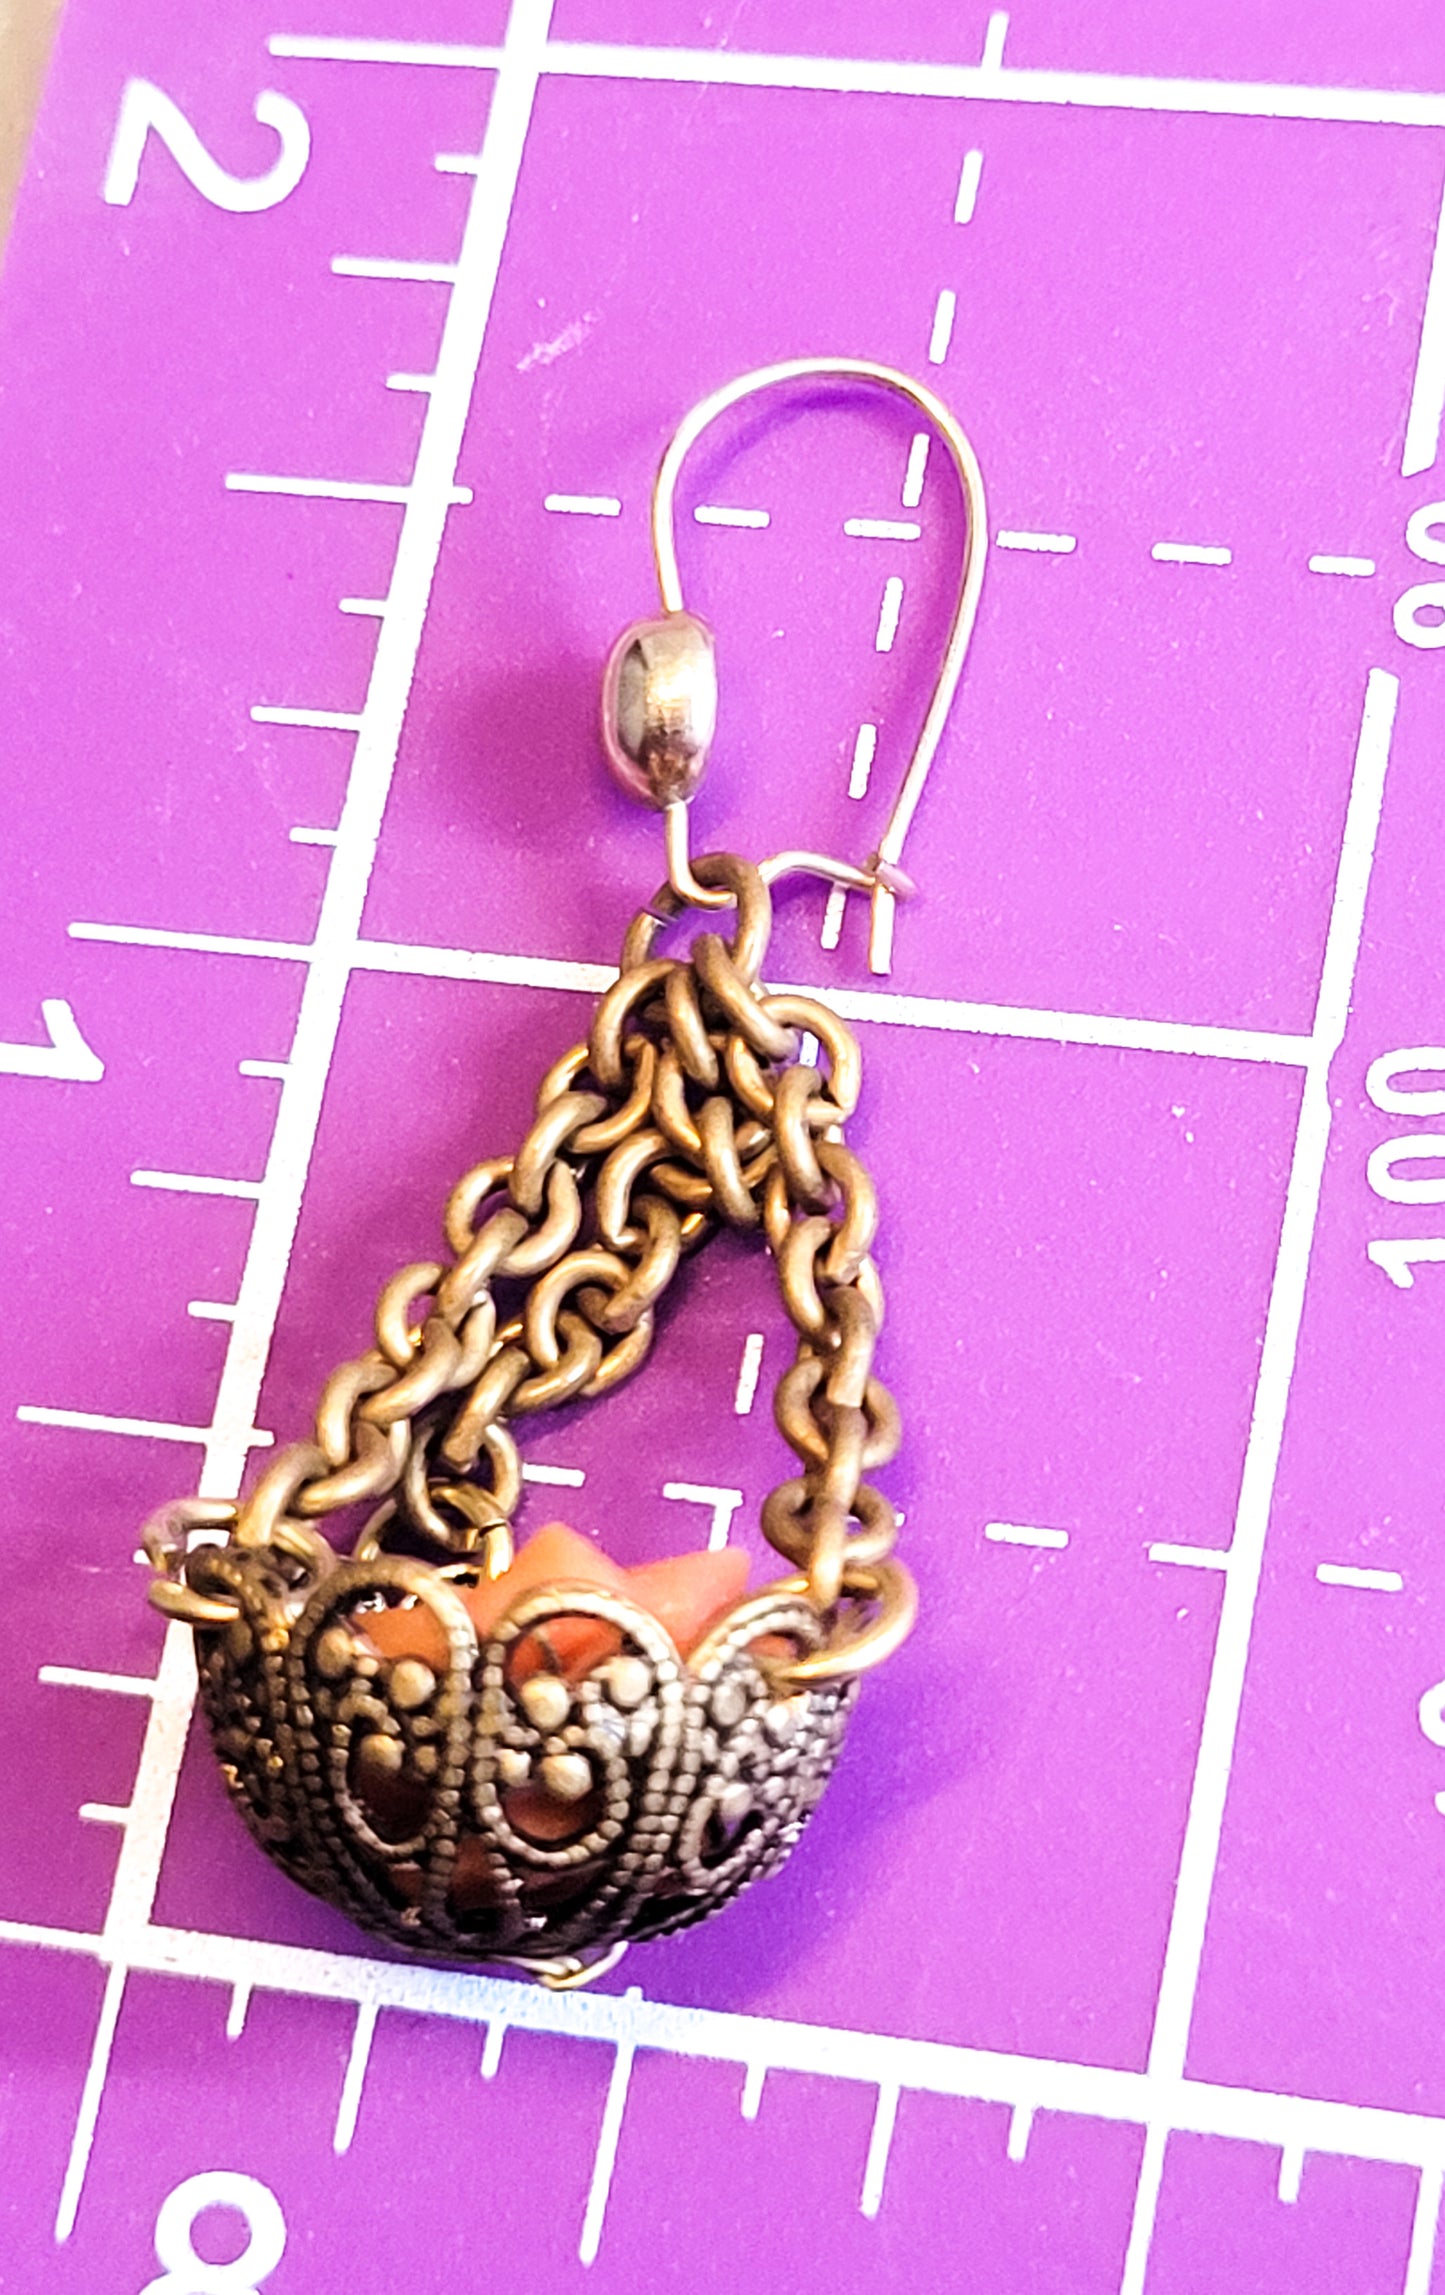 Italian Genuine branch coral hanging basket 10kt gold filled vintage earrings